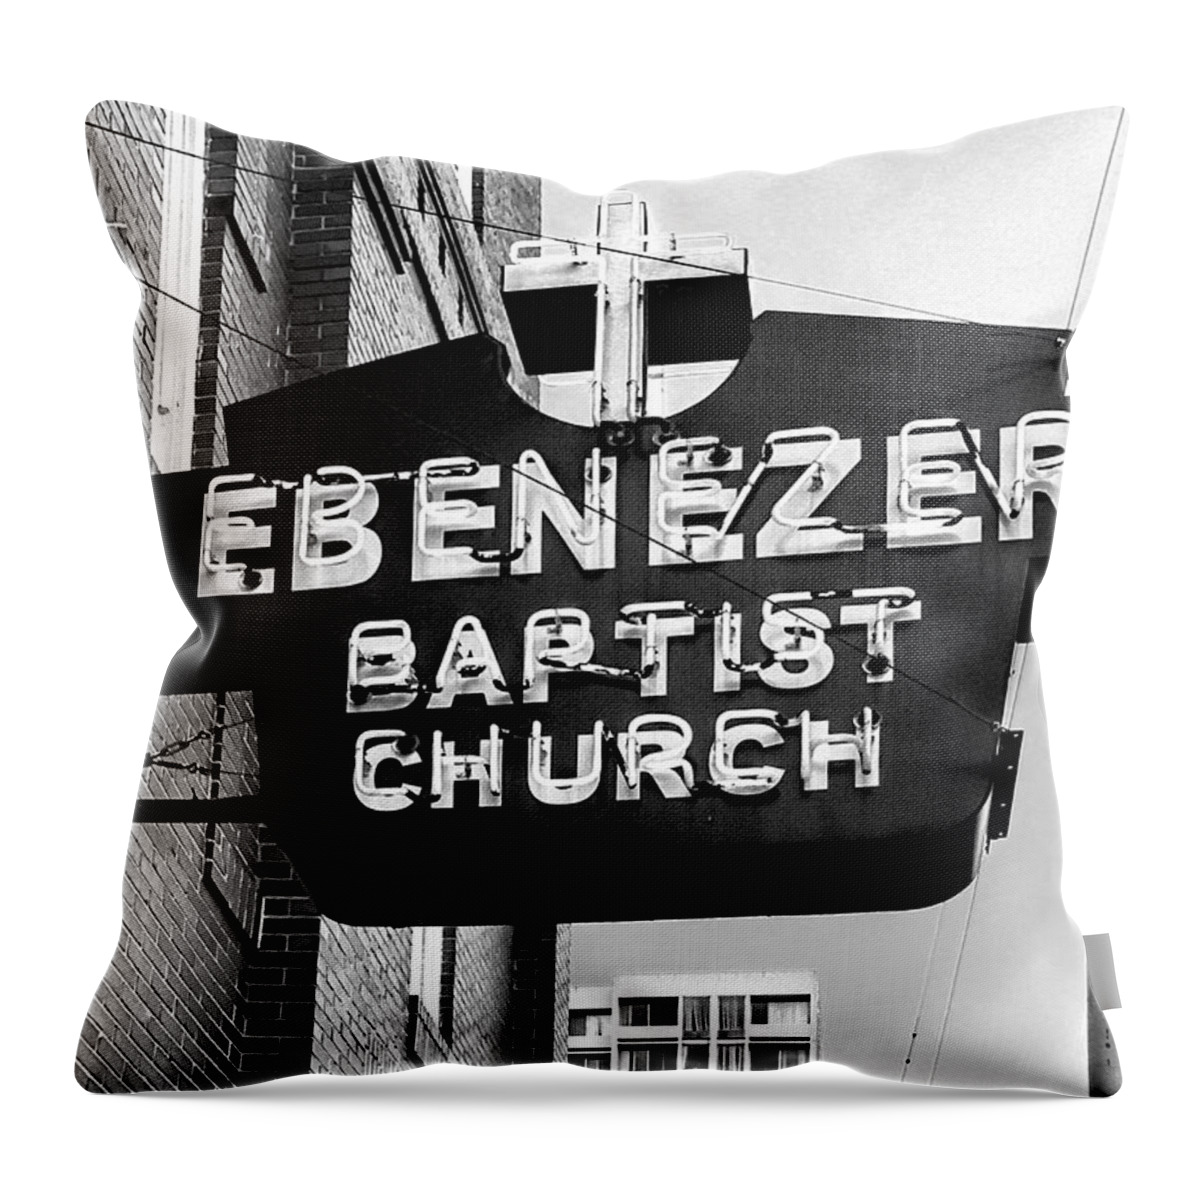 Ebenezer Throw Pillow featuring the photograph Ebenezer Baptist Church by Dominic Piperata